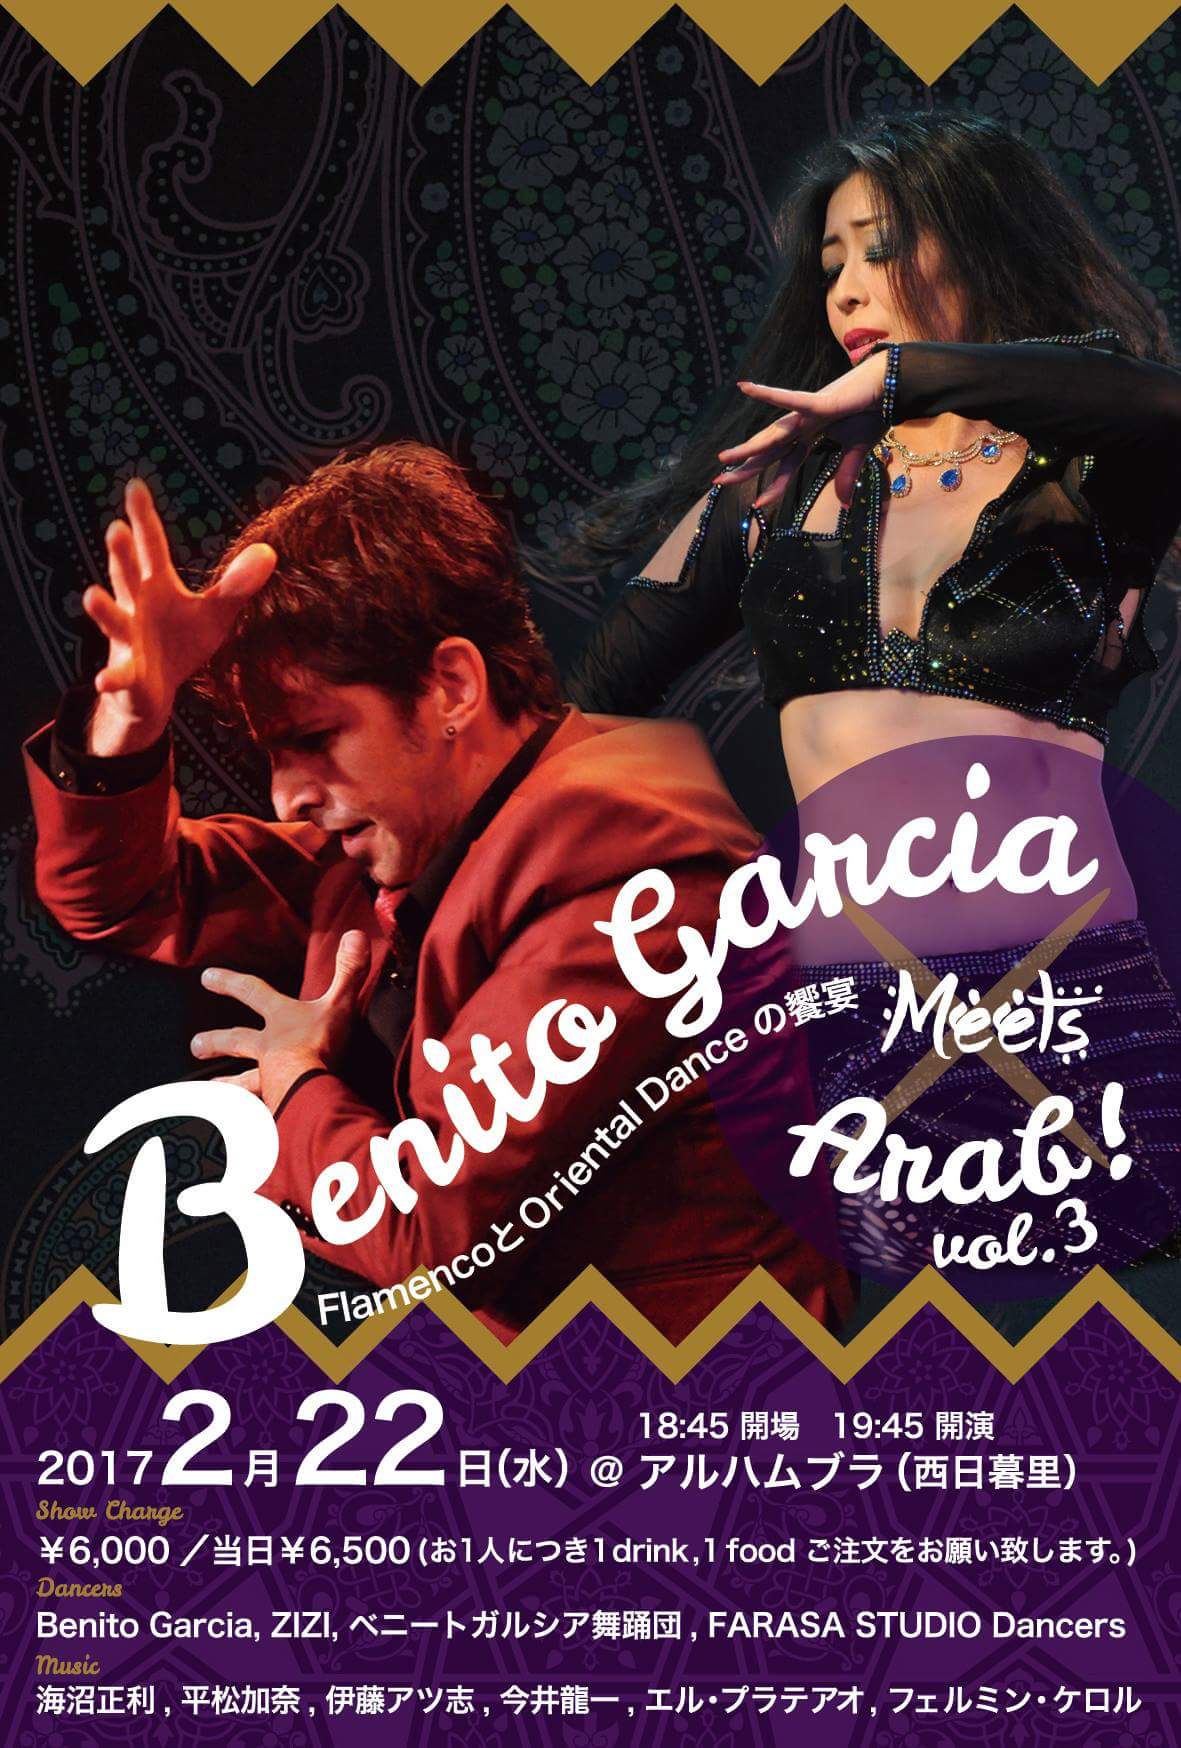 2017.2.22　Wed Benito Garcia Meets Arab Vol.3 FramencoとOriental Danceの饗宴